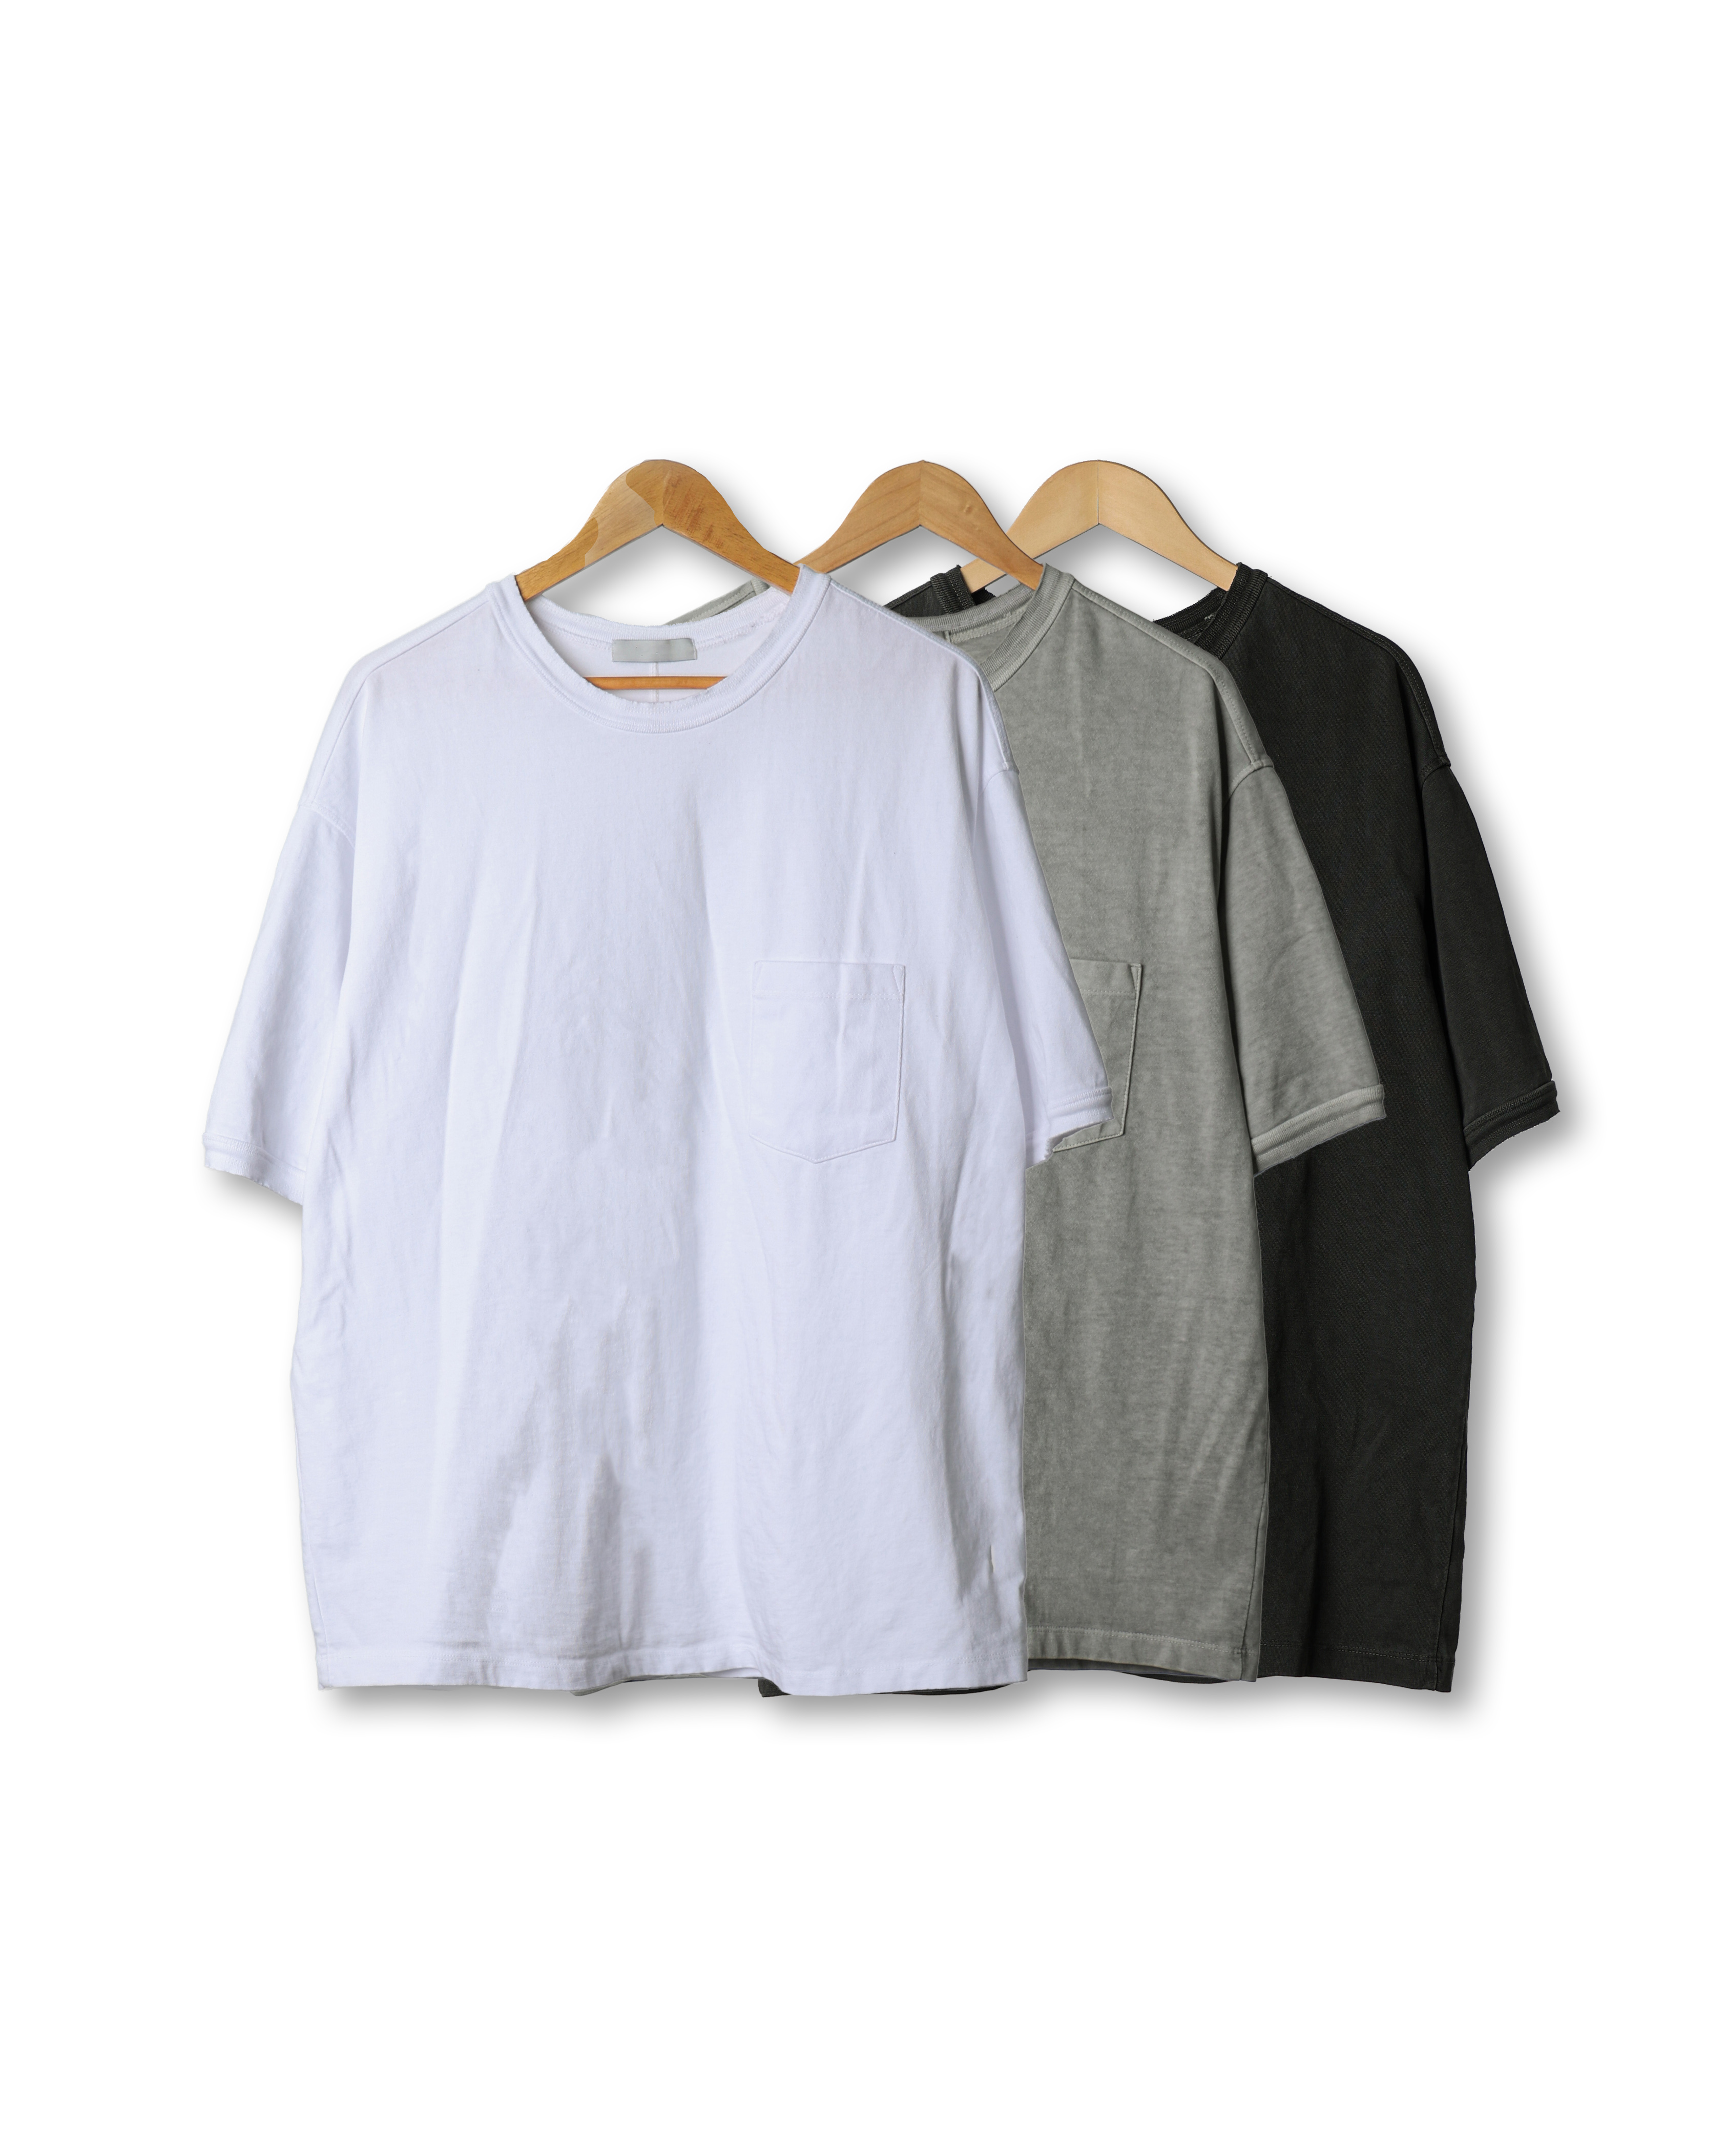 SPEC MARK Rip Pocket Loose T Shirts (Charcoal/Gray/White)